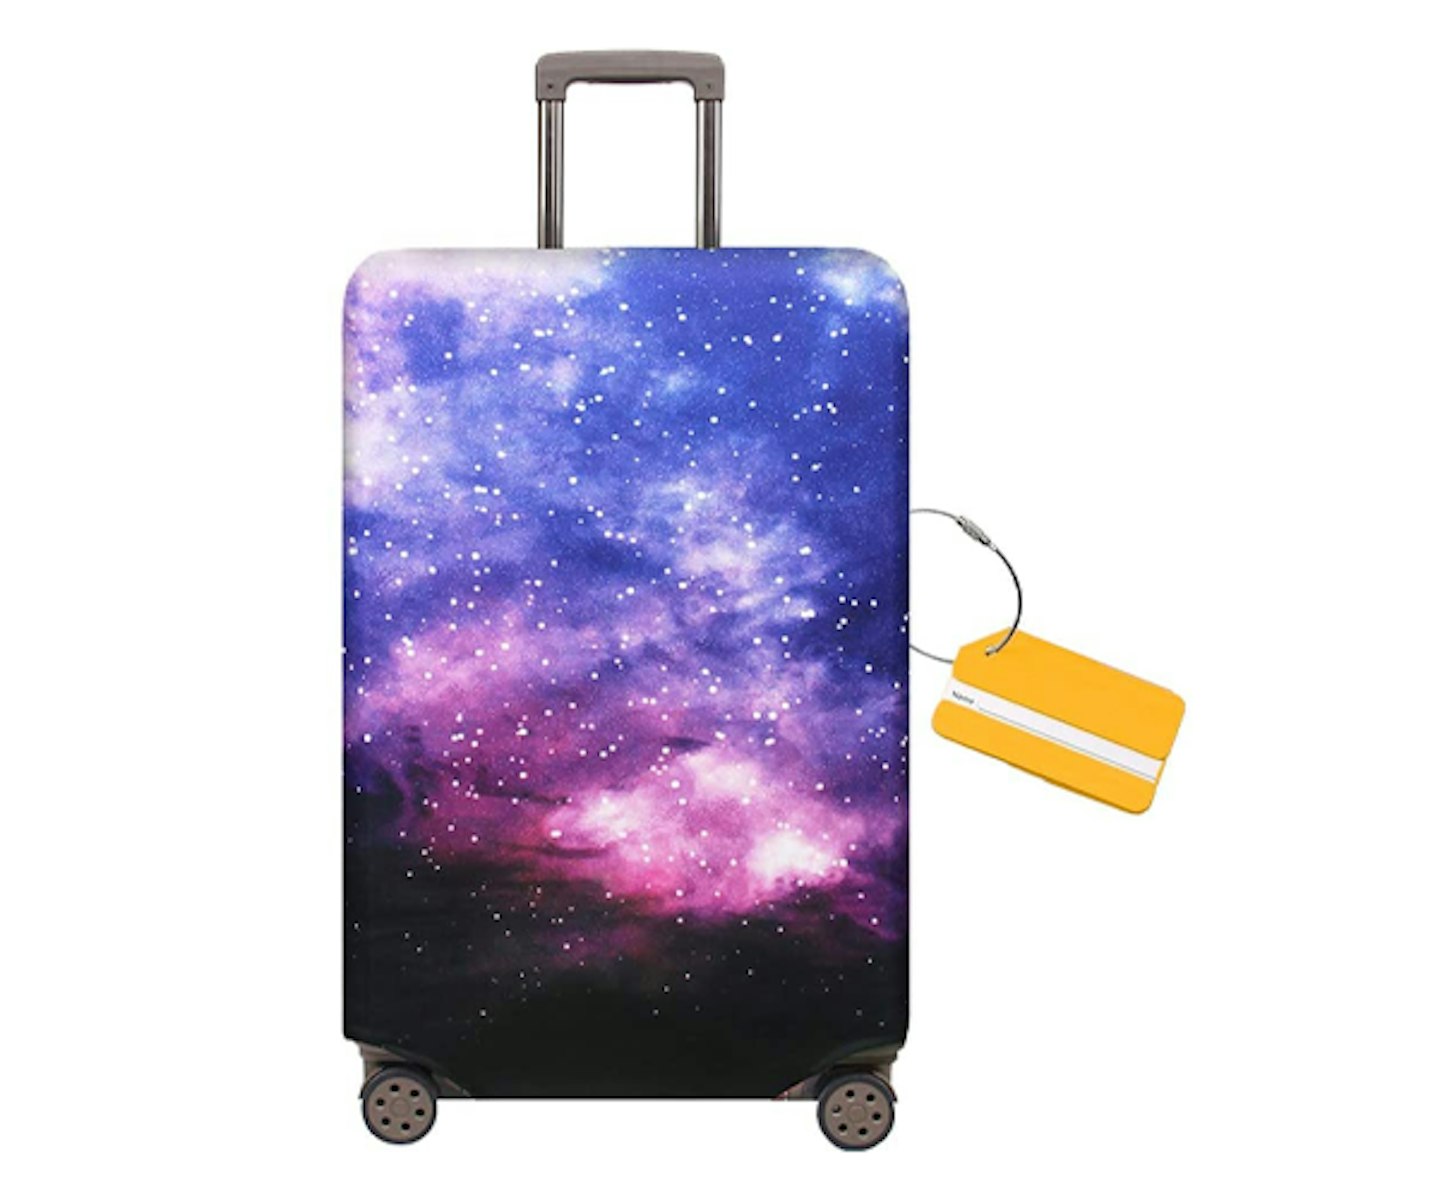 OrgaWise Travel Luggage Cover Elastic Suitcase